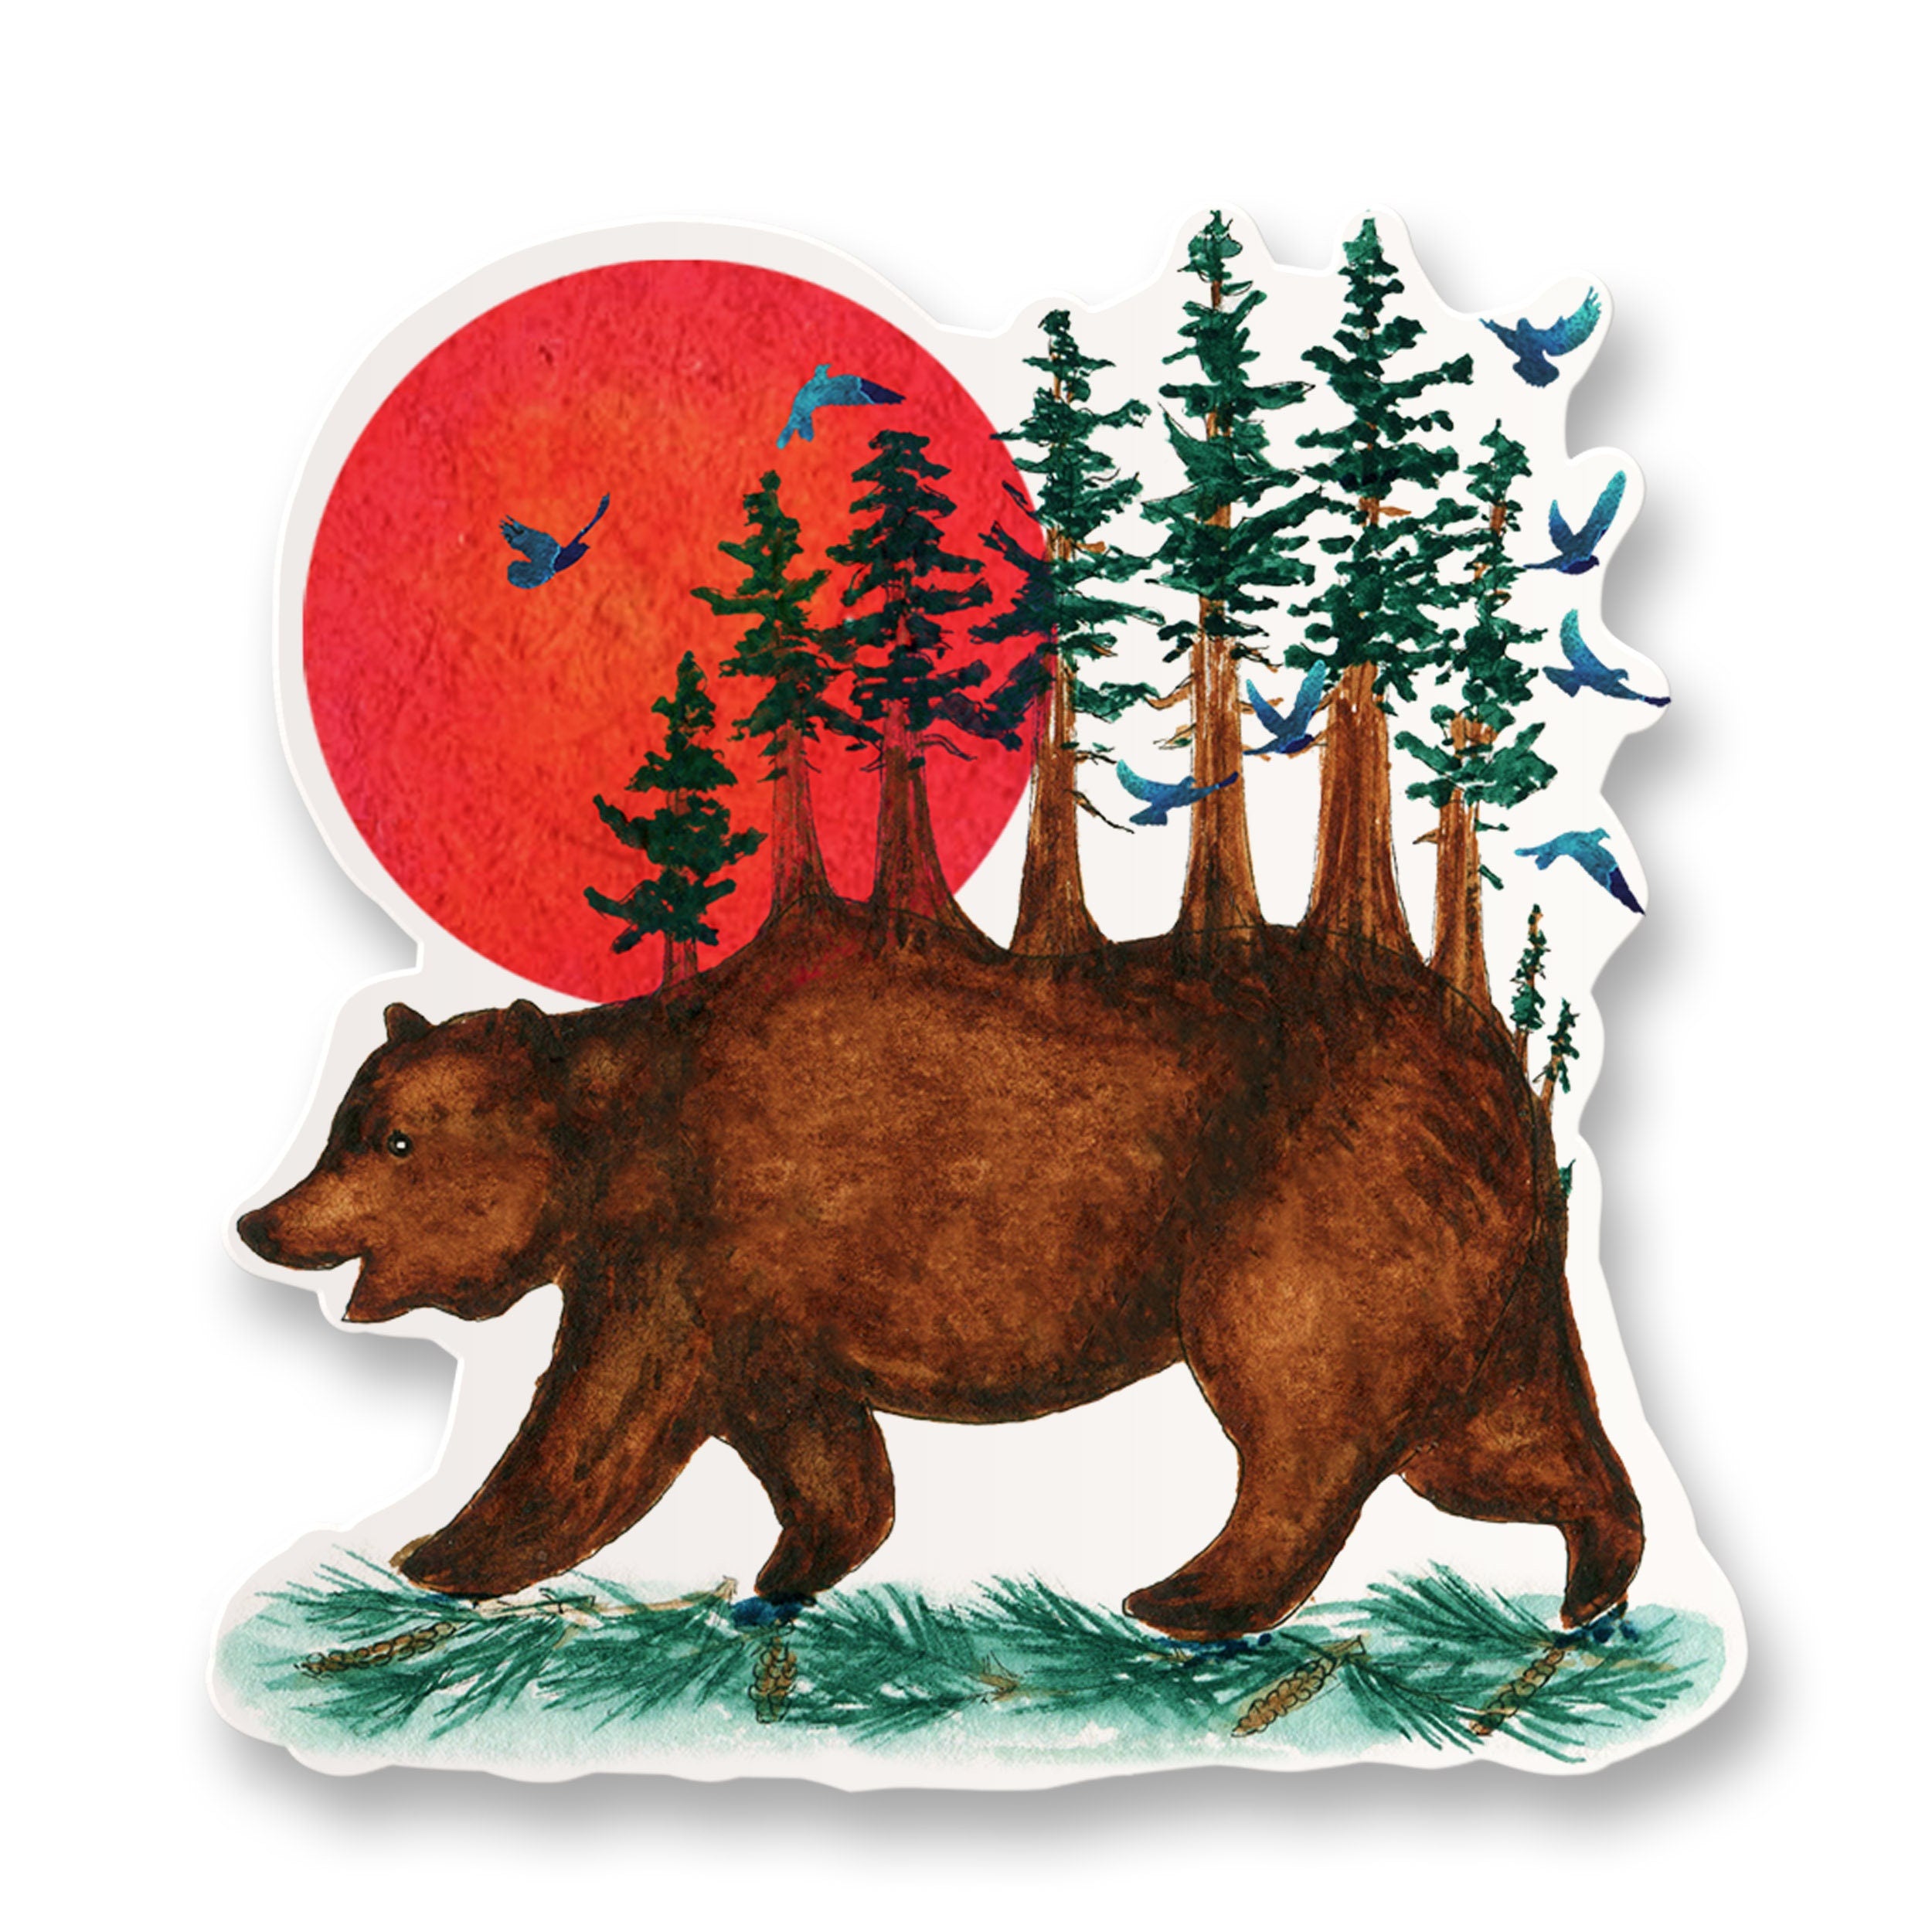 Redwood Forest Sticker - California Bear Sticker - Camping Sticker For  Nature Lover Gift - Waterproof Stickers - Liyana Studio